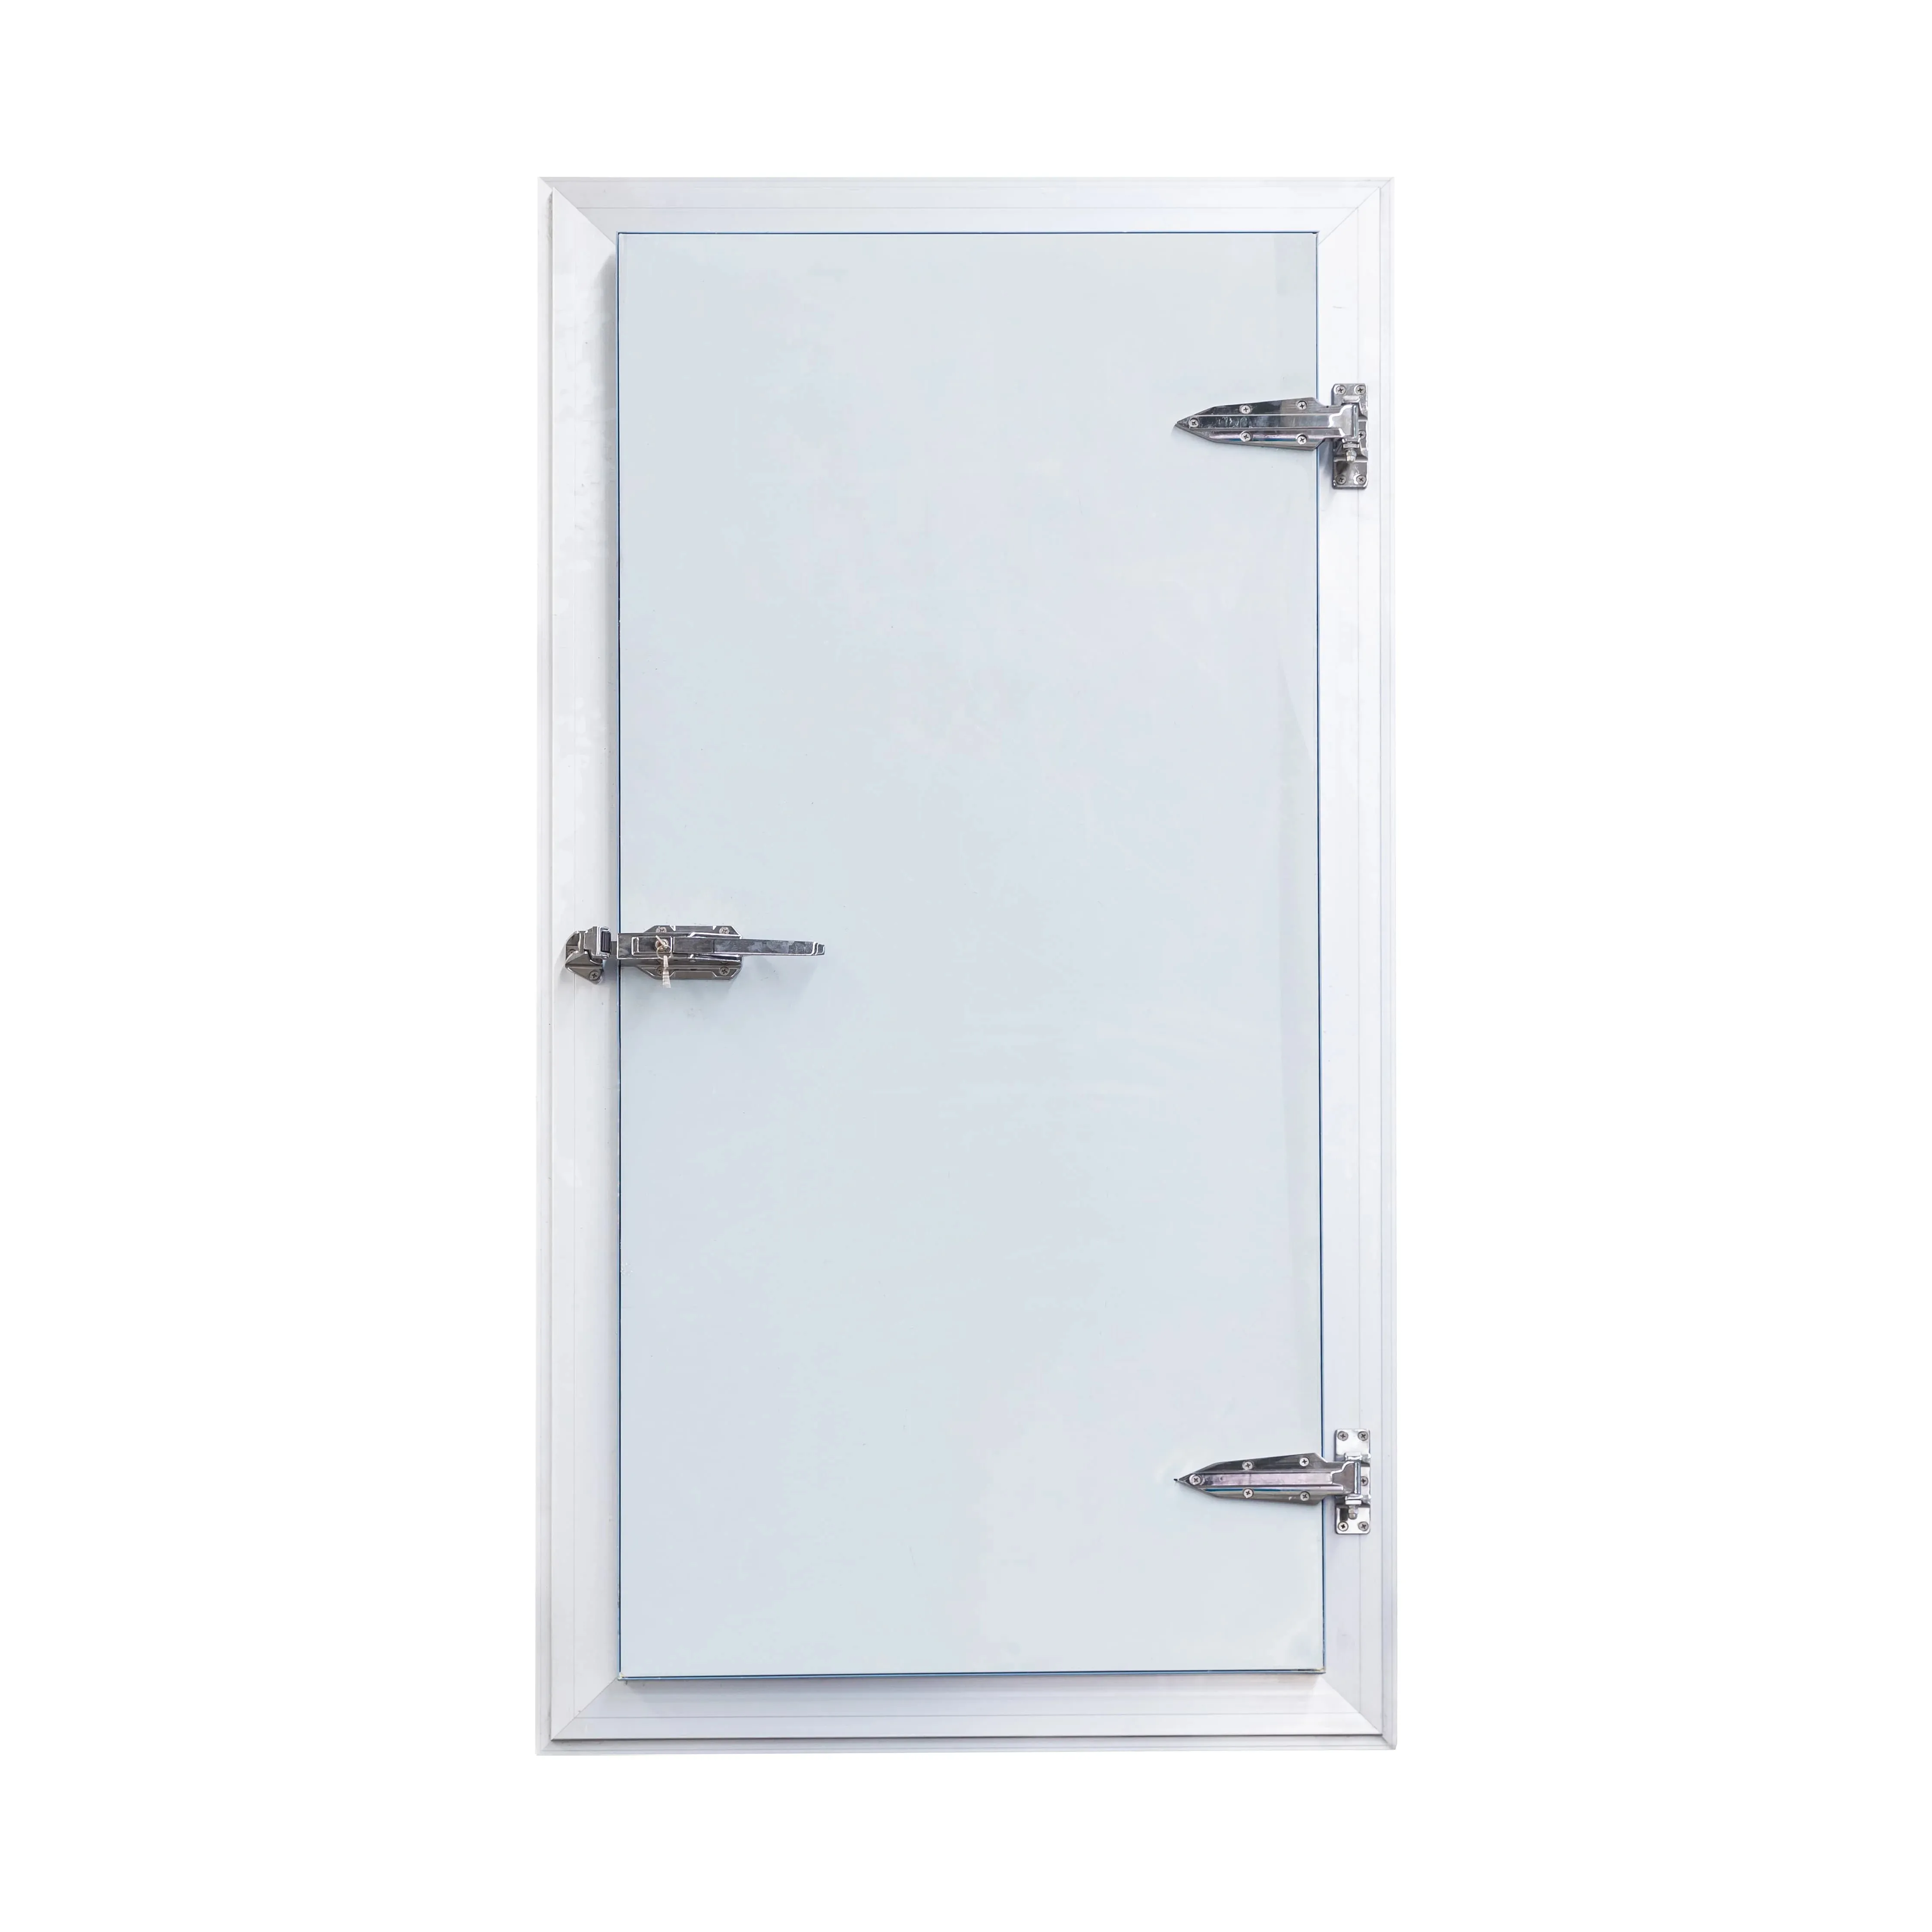 Pintu ruang dingin bahan pintu ruang dingin dijual pintu gudang penyimpanan dingin